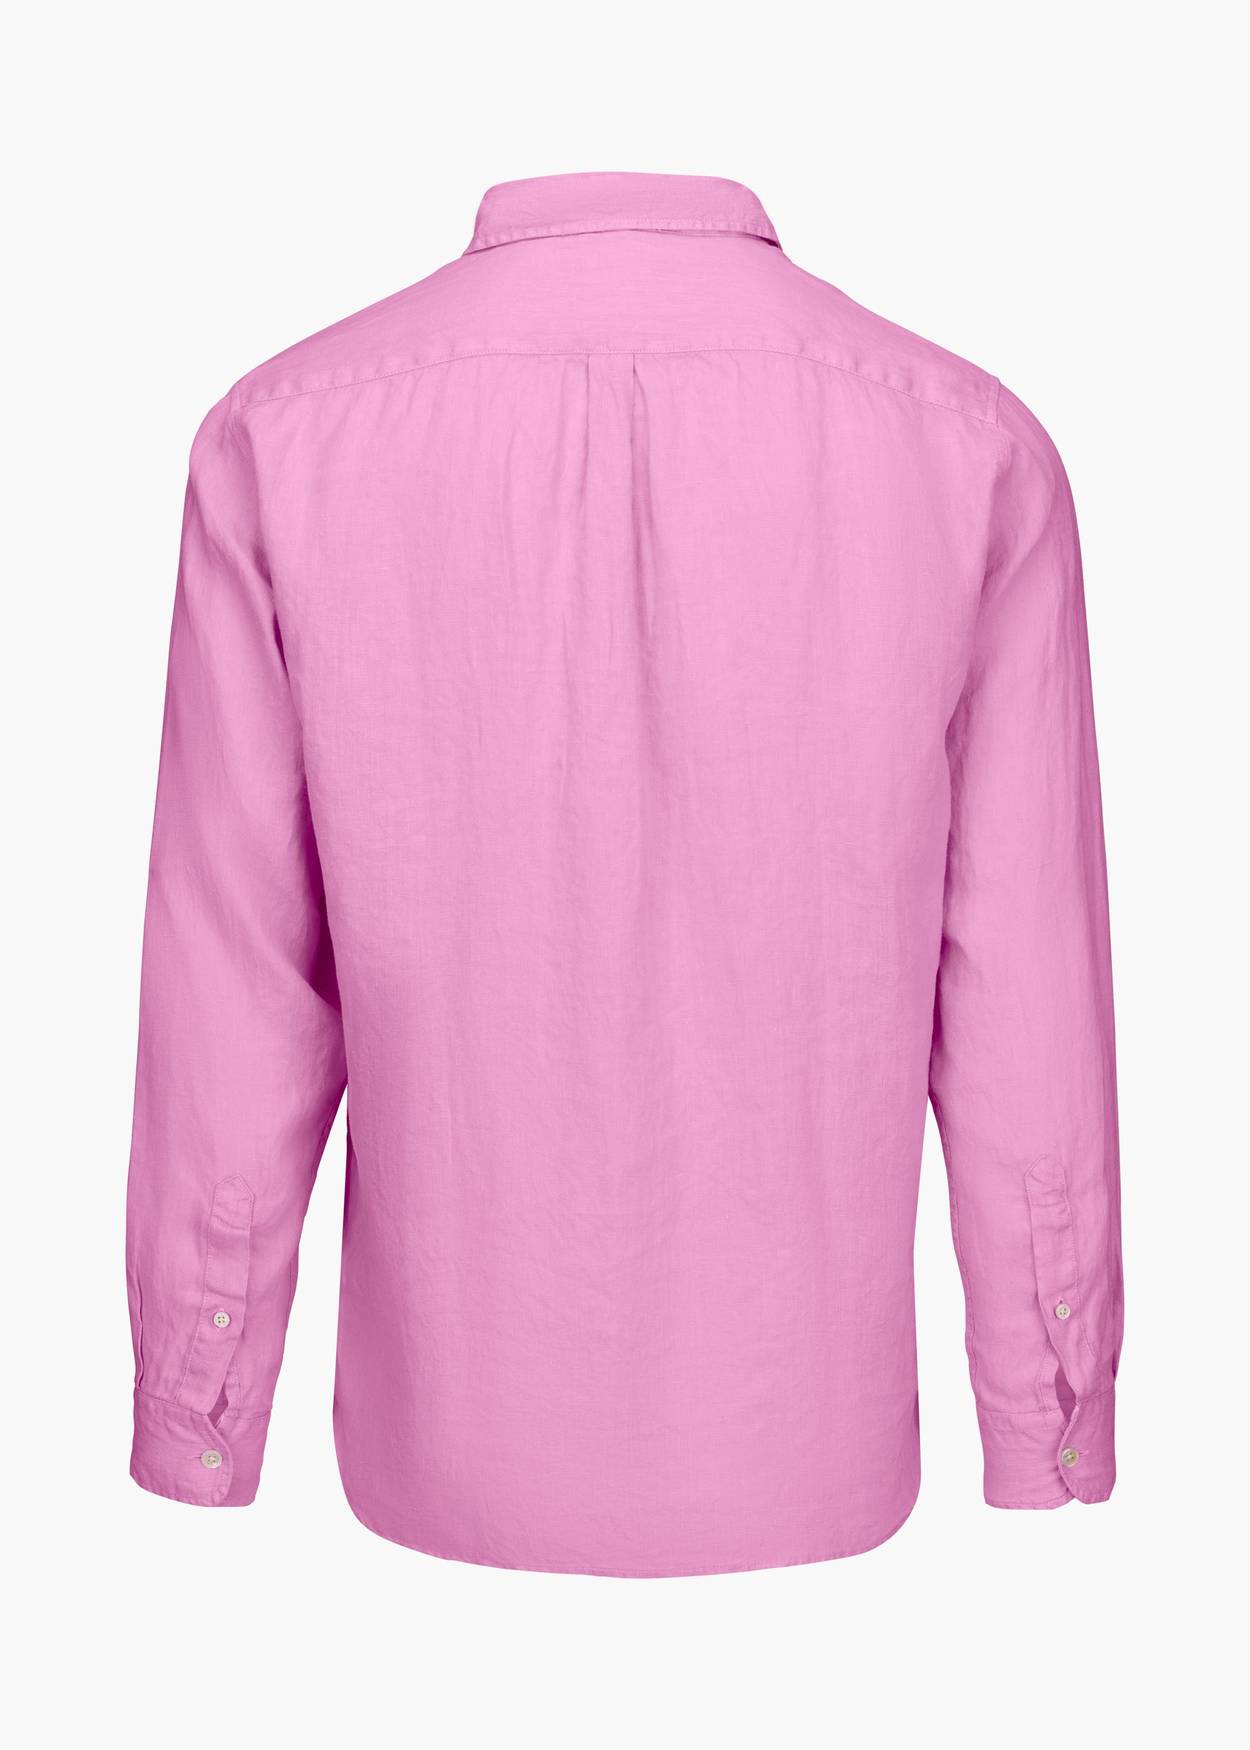 Amalfi Linen Shirt